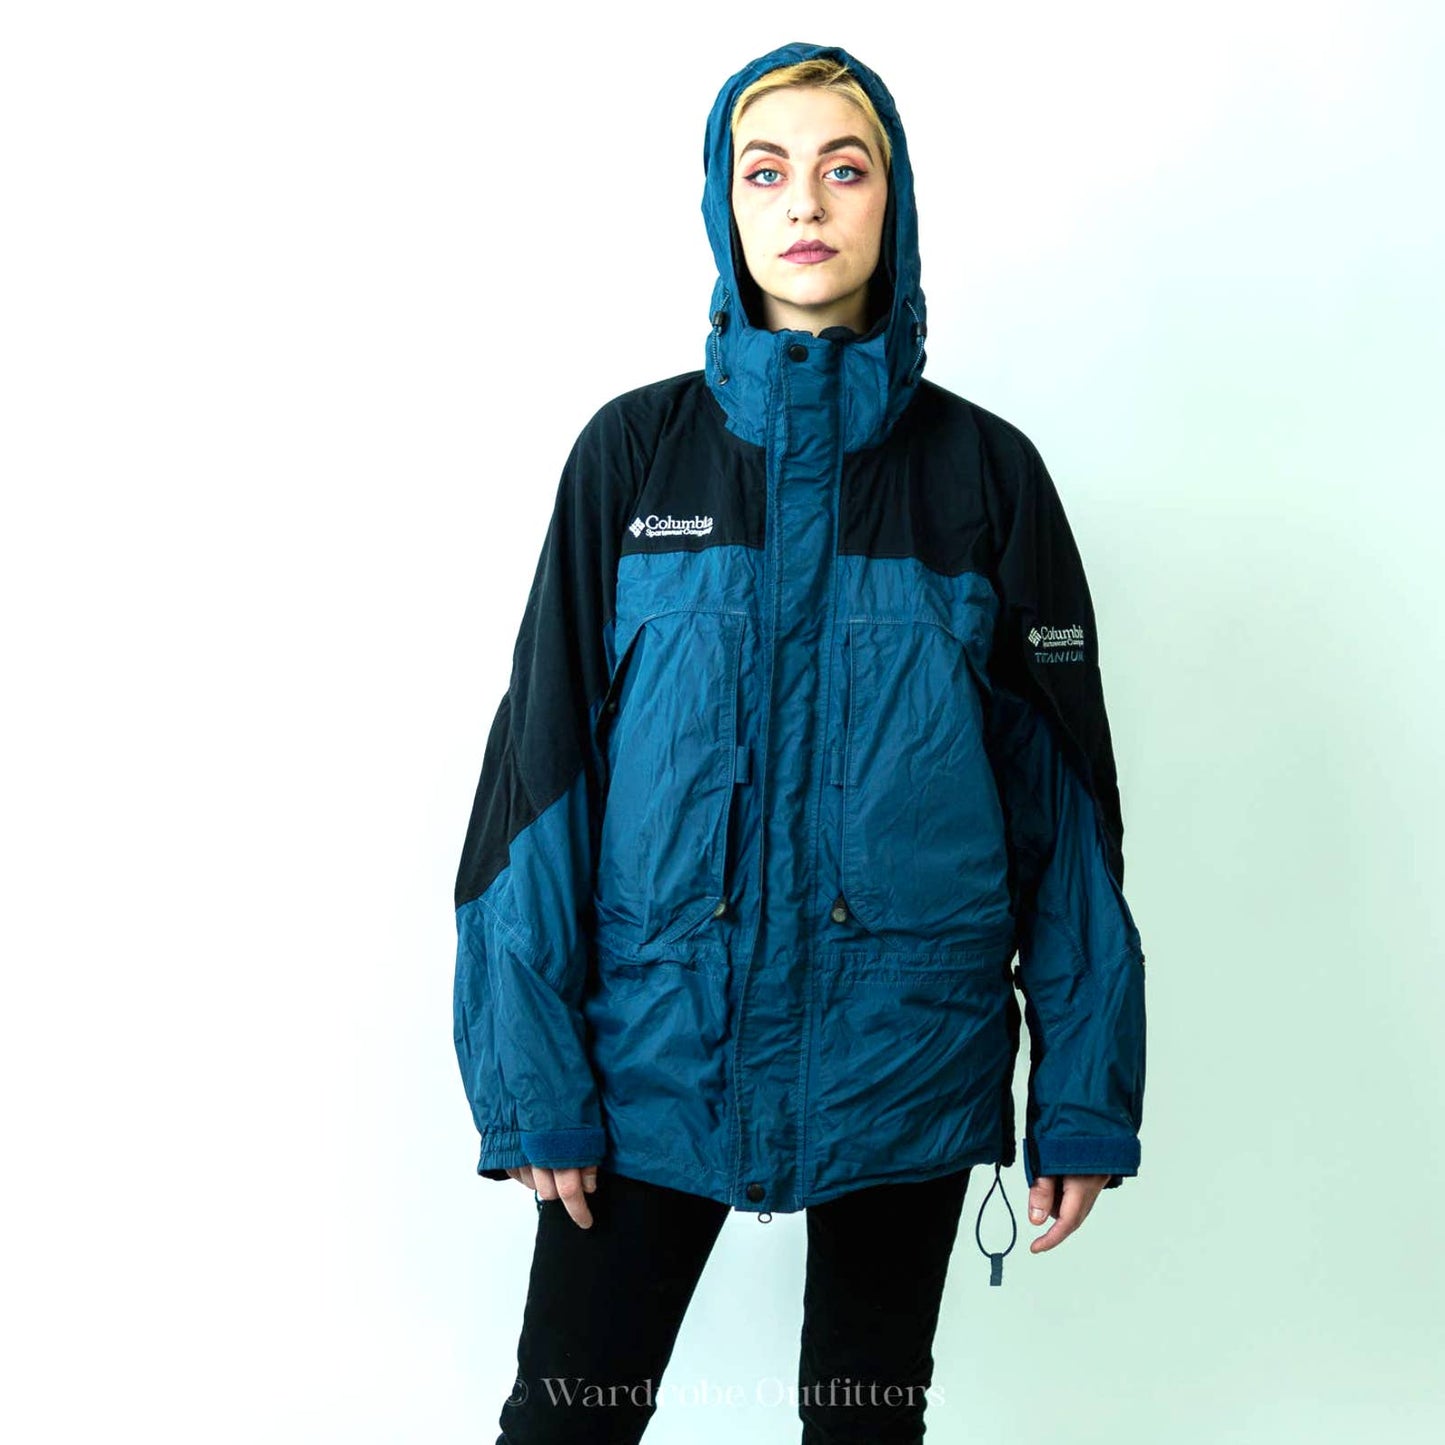 Columbia Sportswear Omni Vertex Winter Ski Rain Jacket - S